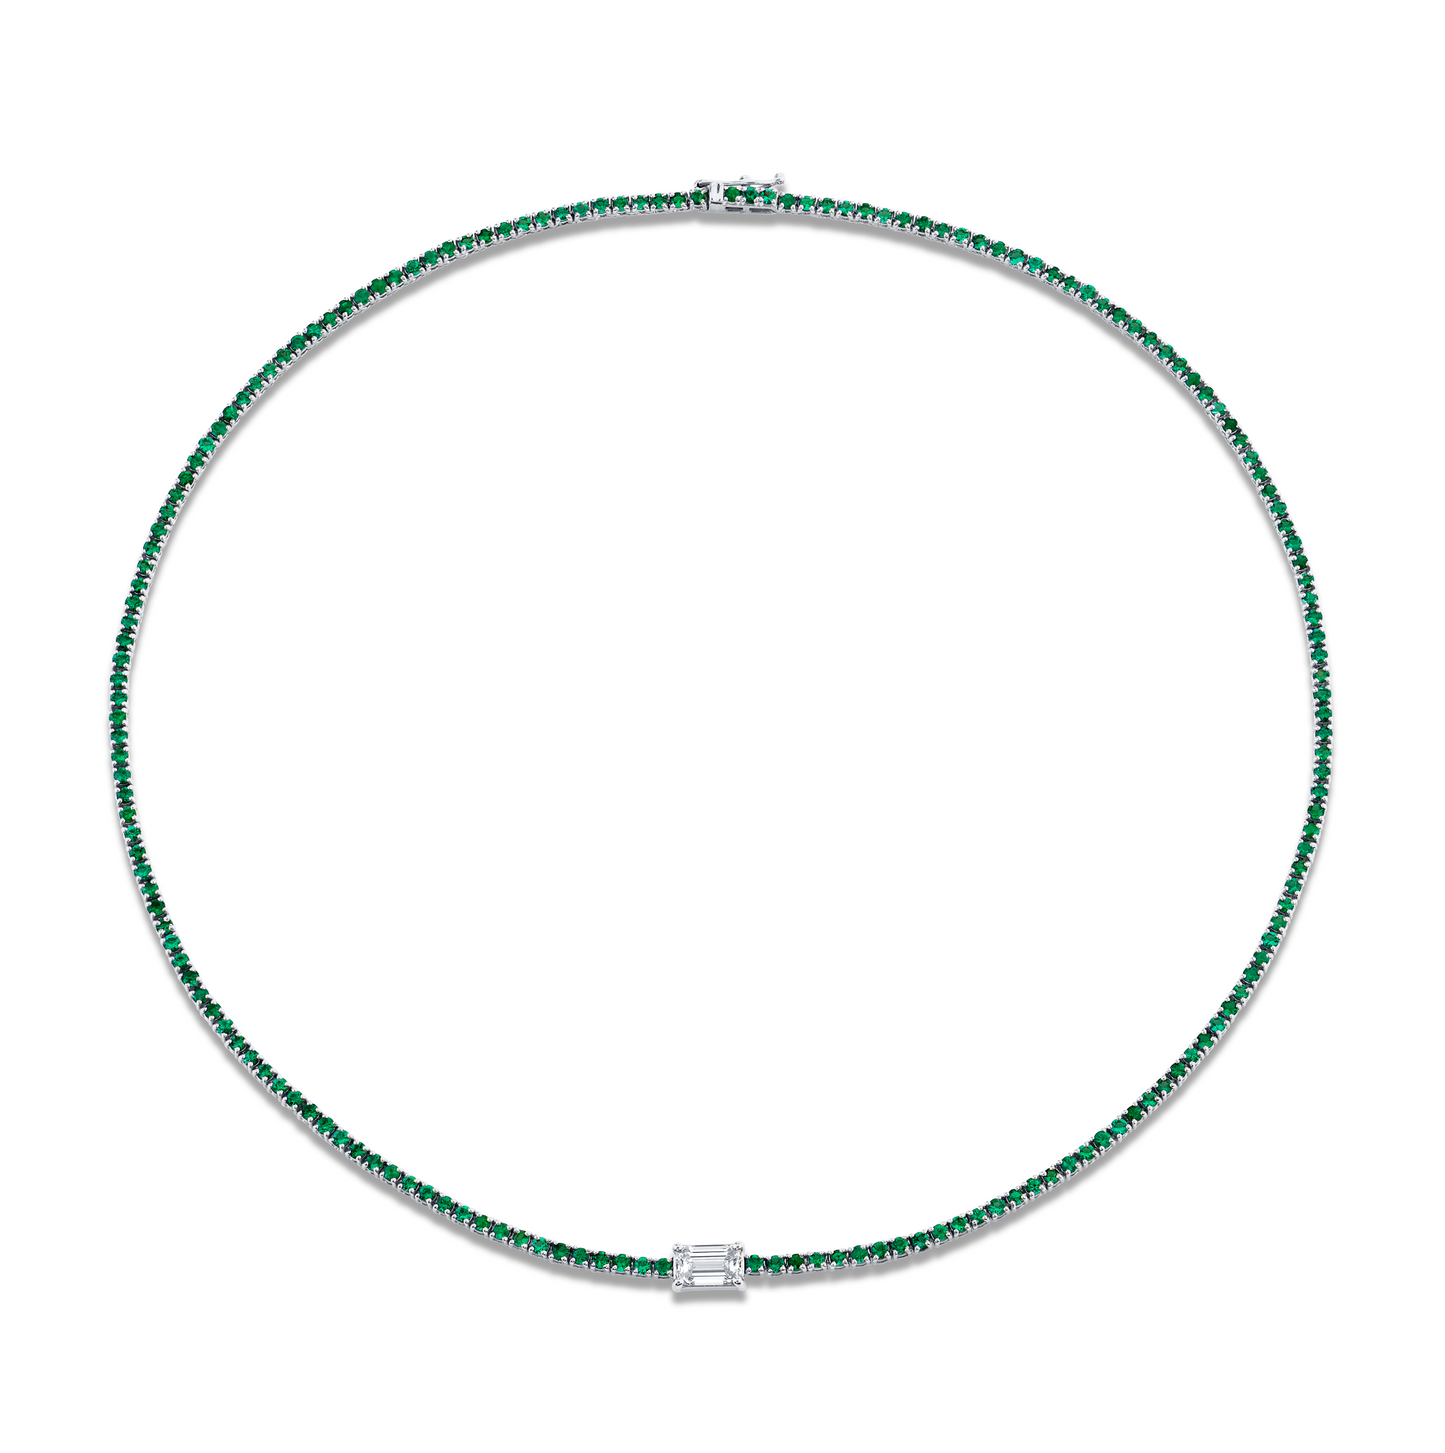 5.8 Carat Diamond Accent Straight Line Necklace